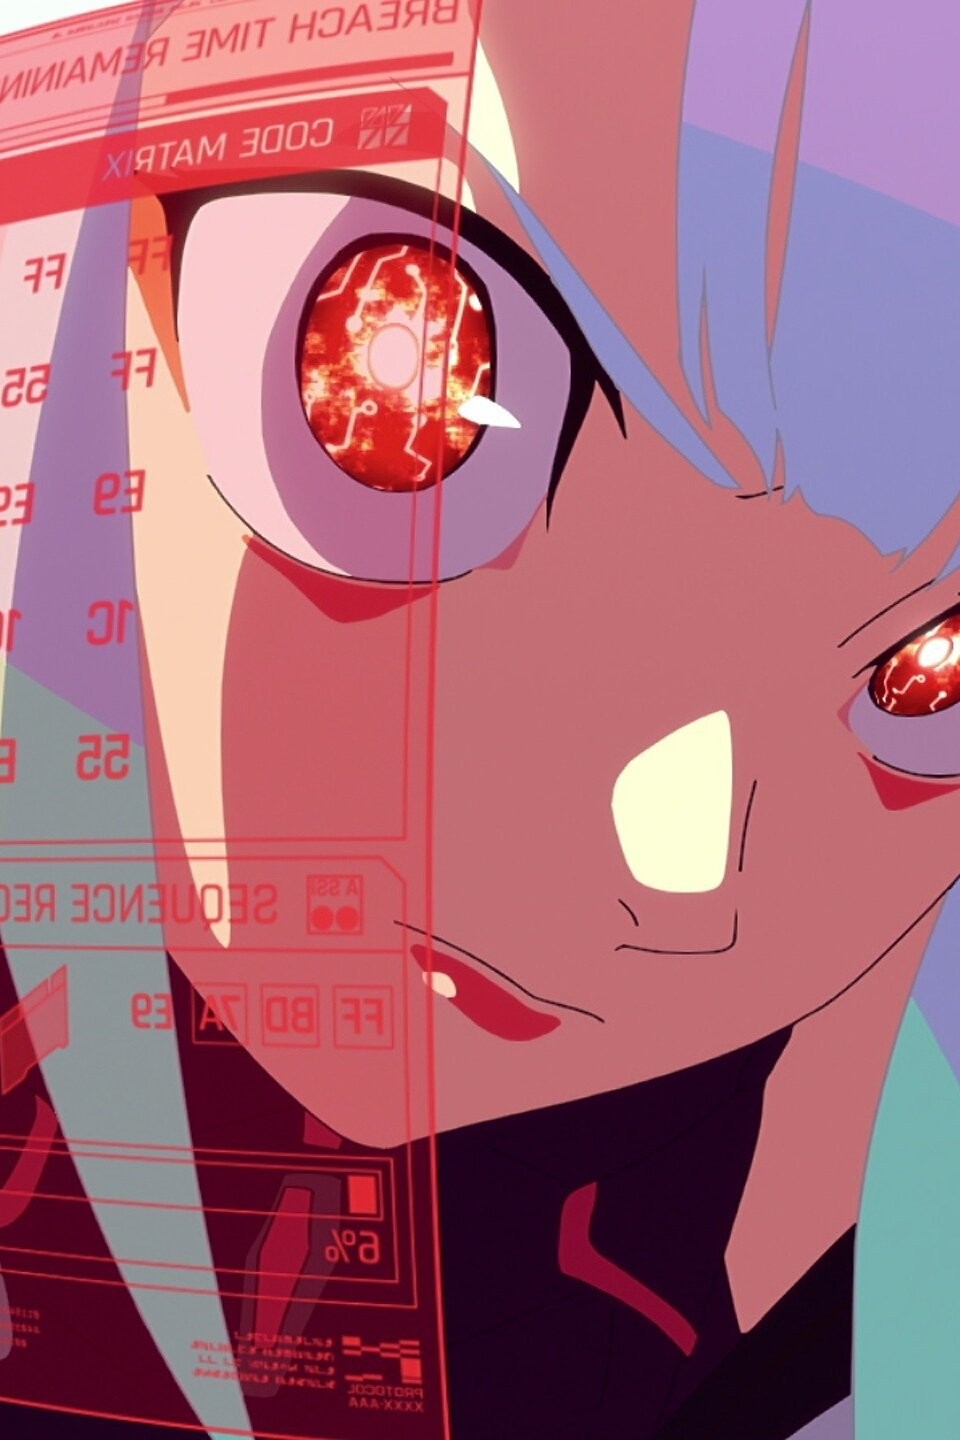 Discover 155+ best cyberpunk anime - 3tdesign.edu.vn